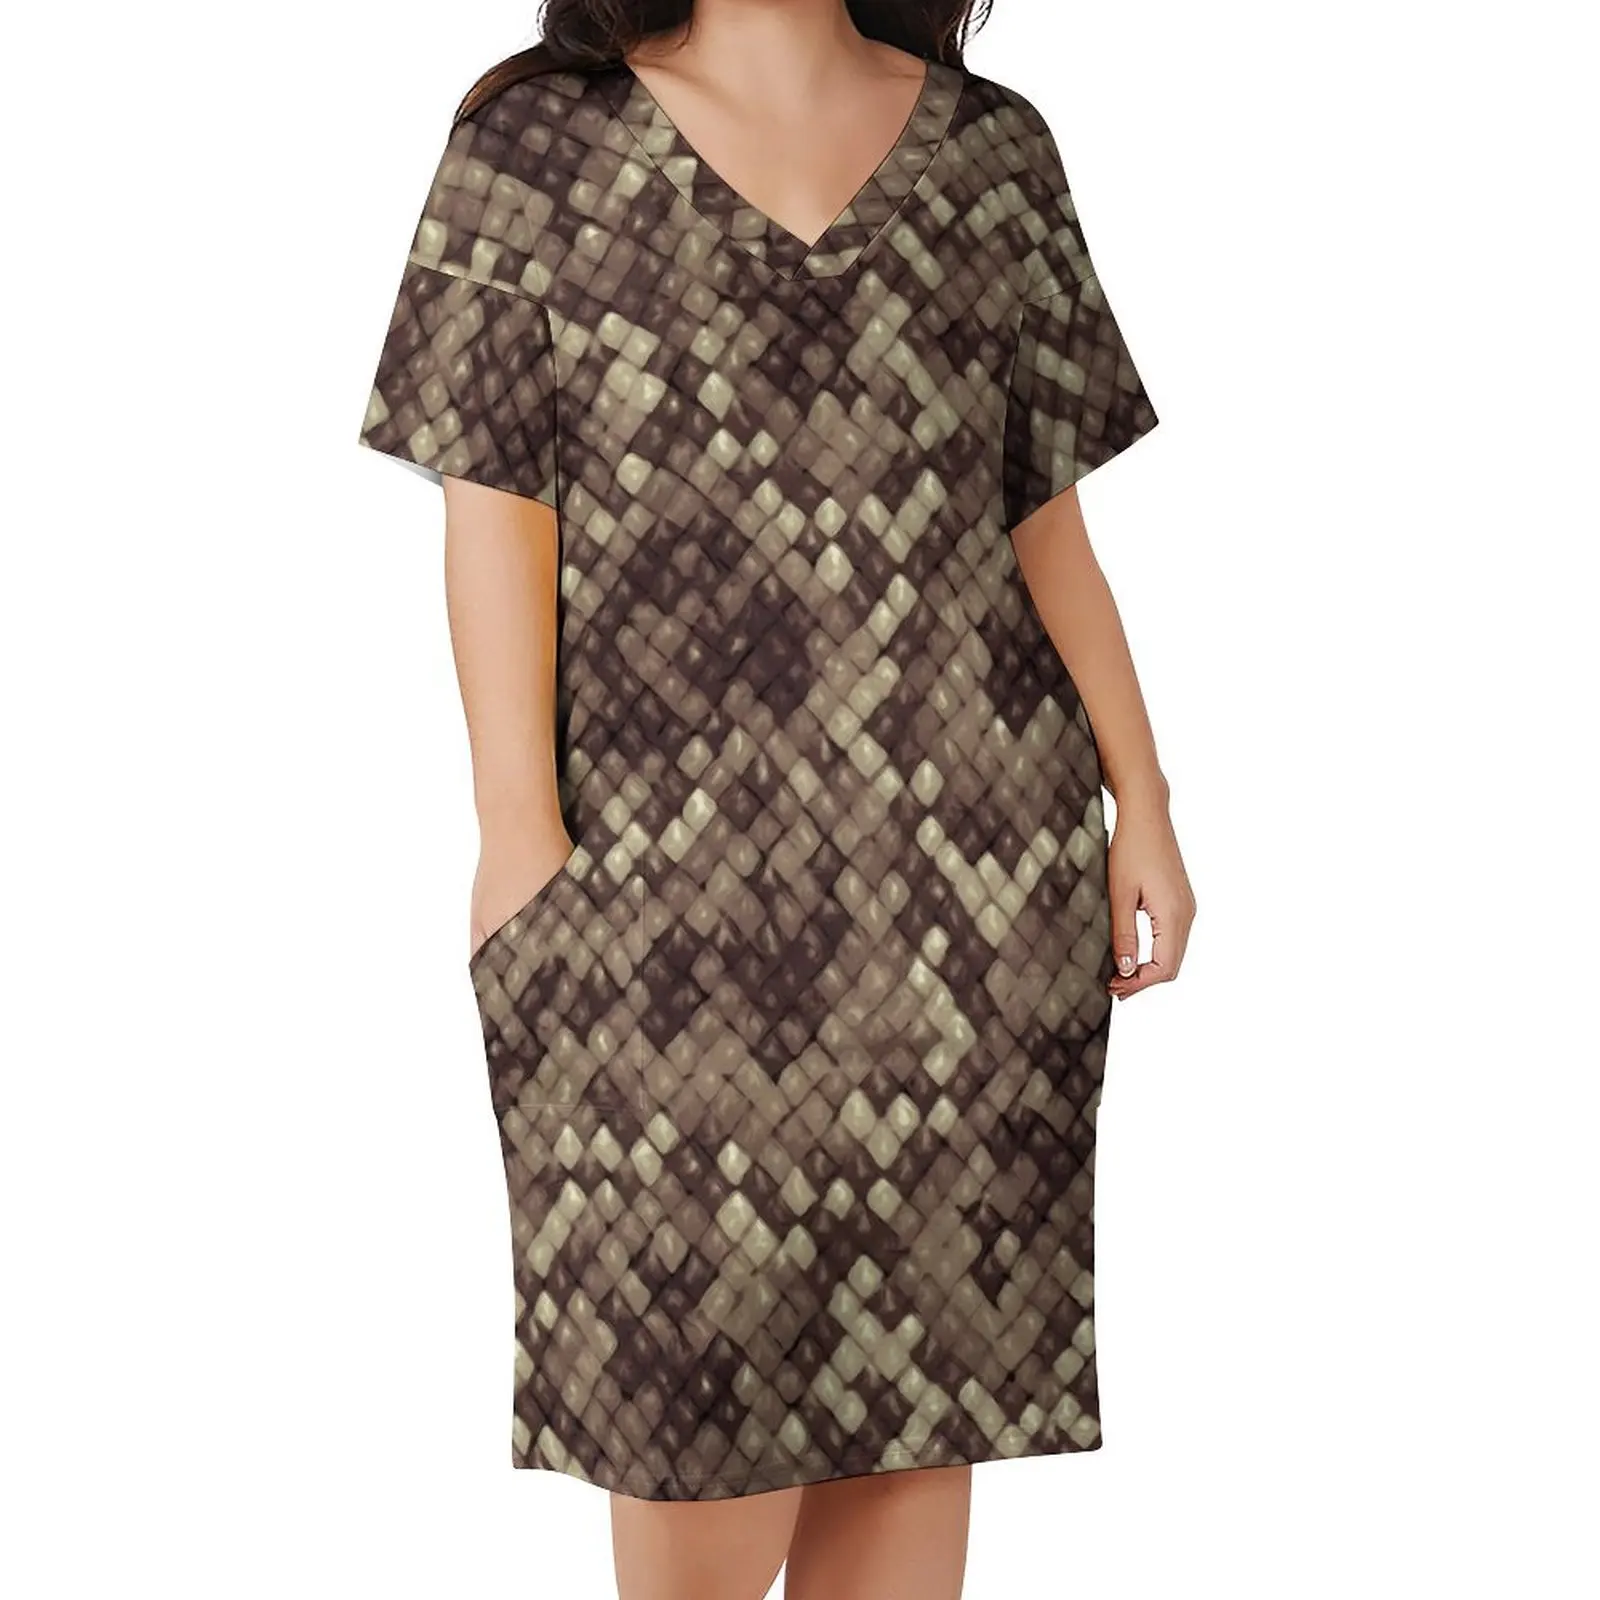 

Snakeskin Python Dress V Neck Animal Print Stylish Dresses Women Aesthetic Pattern Casual Dress With Pockets Big Size 4XL 5XL